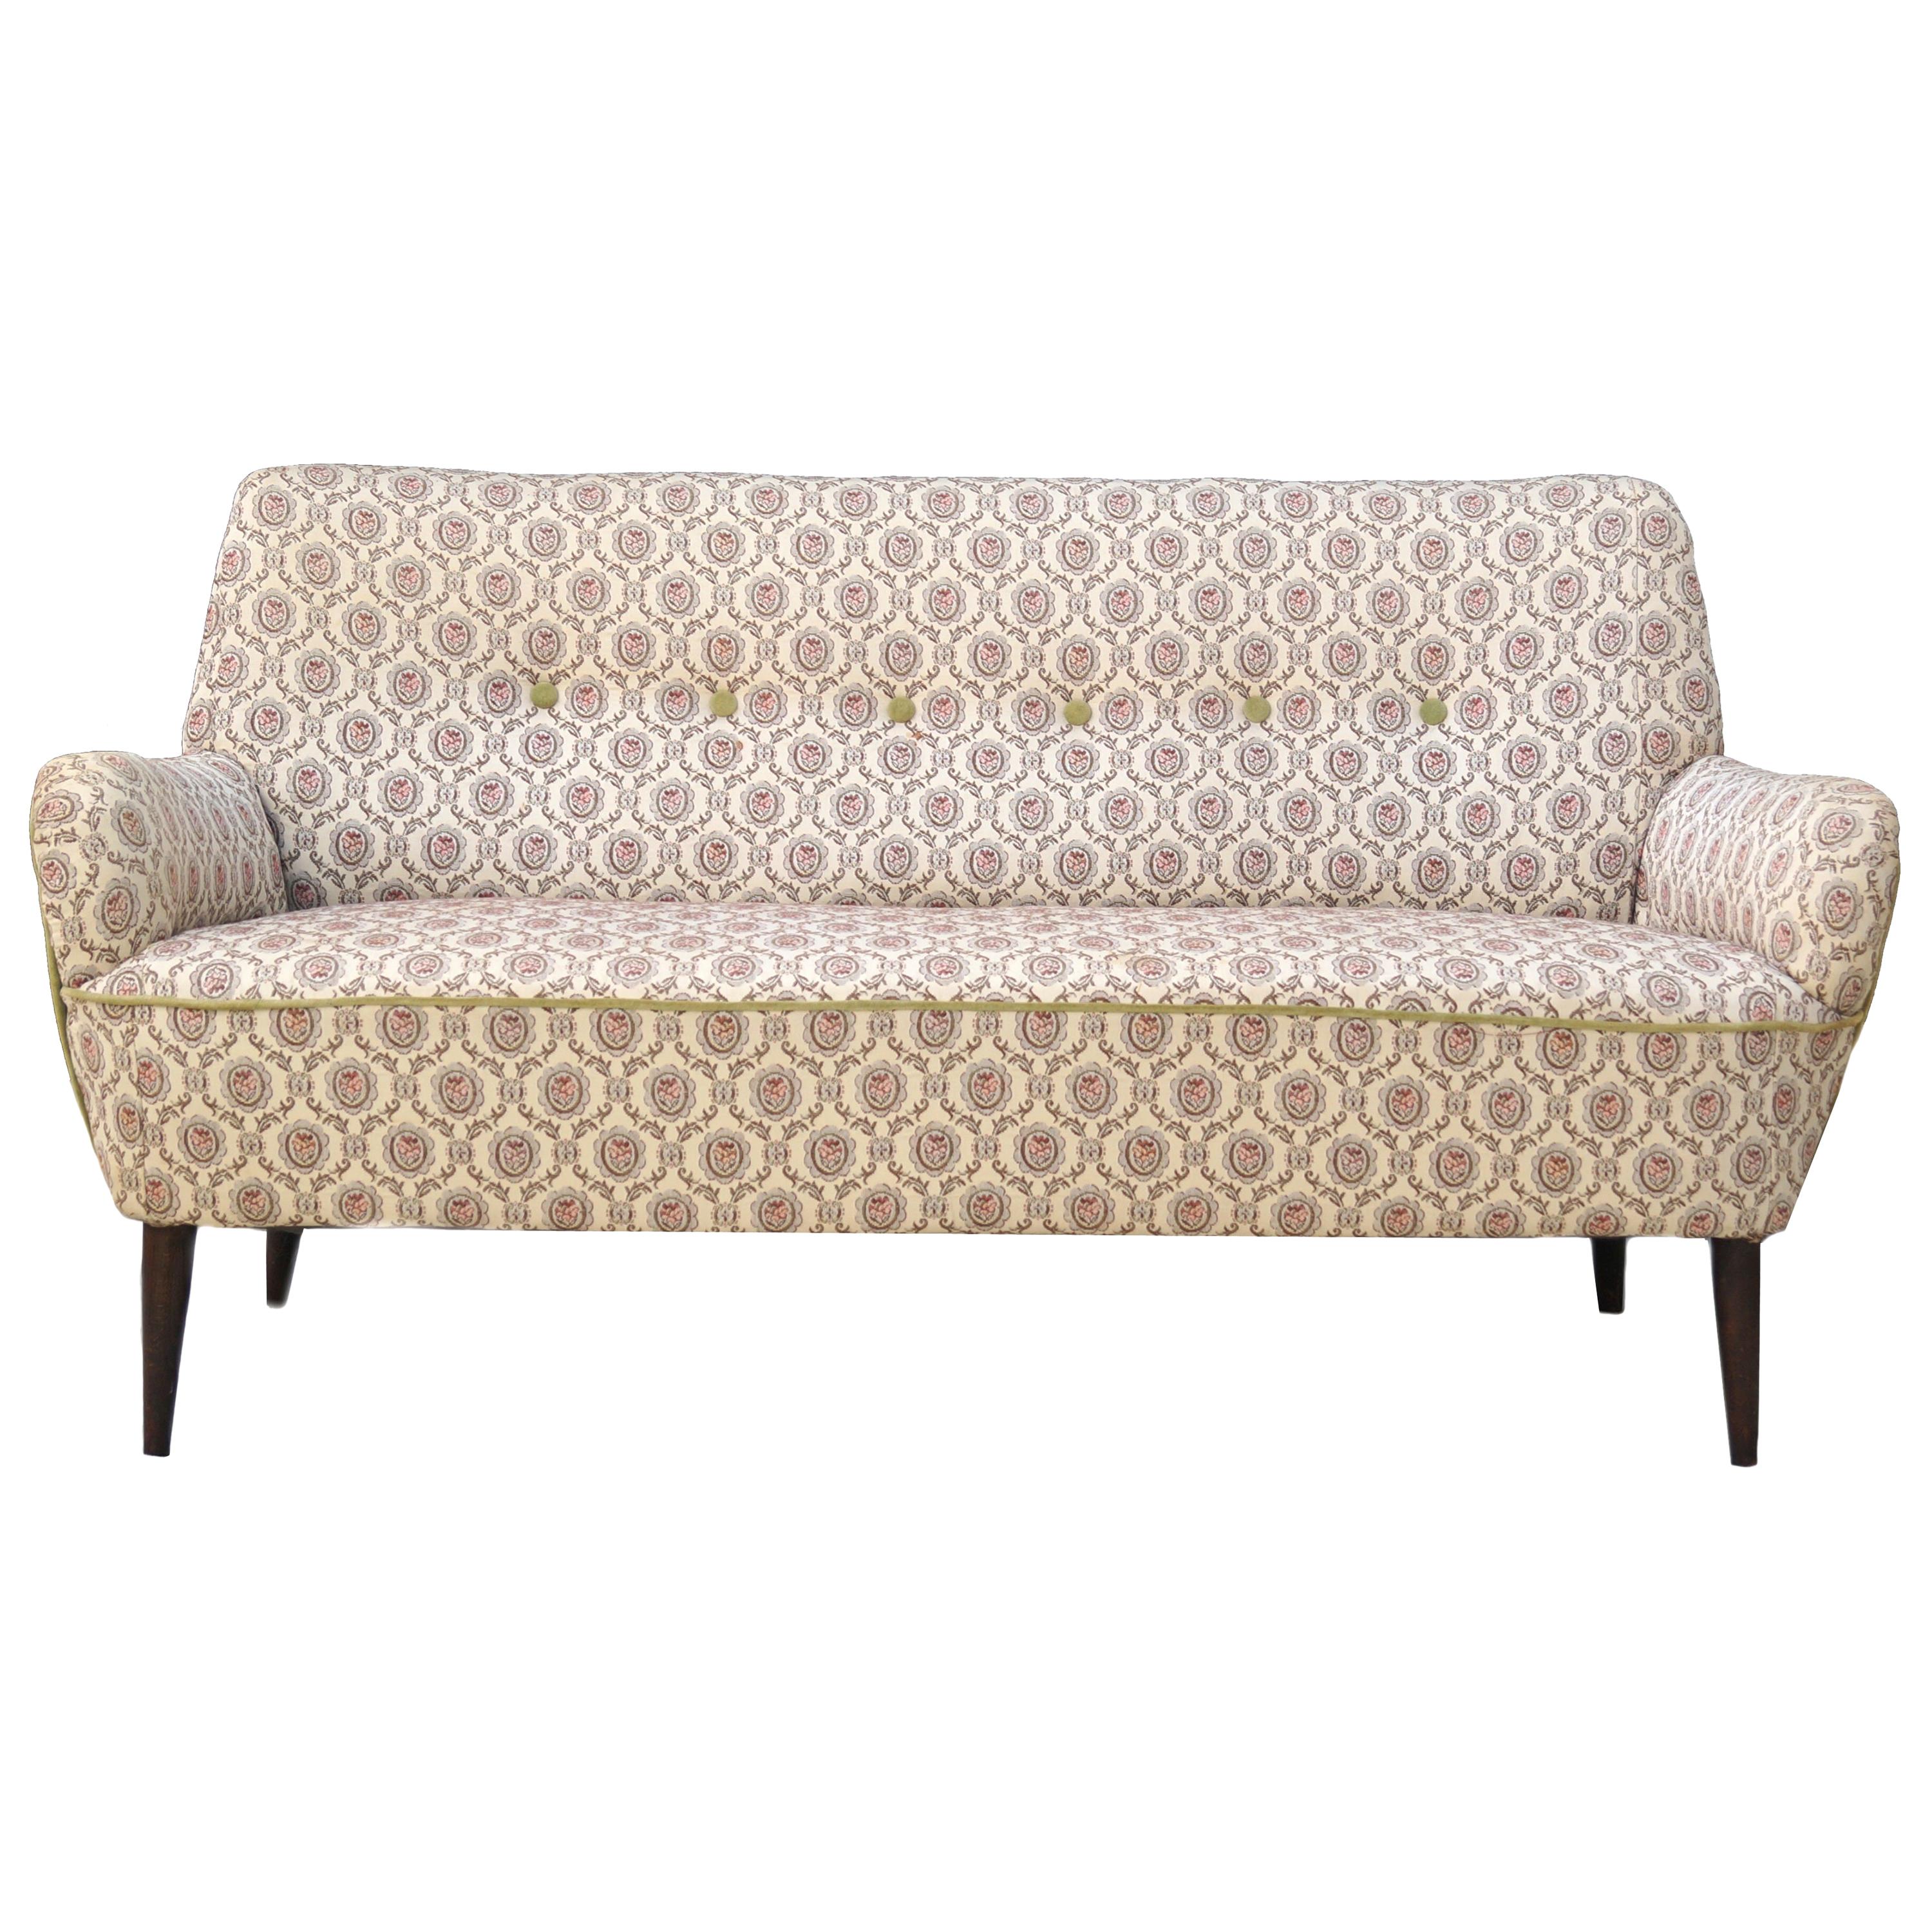 Mid-Century Modern Sofa Loveseat Settee Manner of Gio Ponti